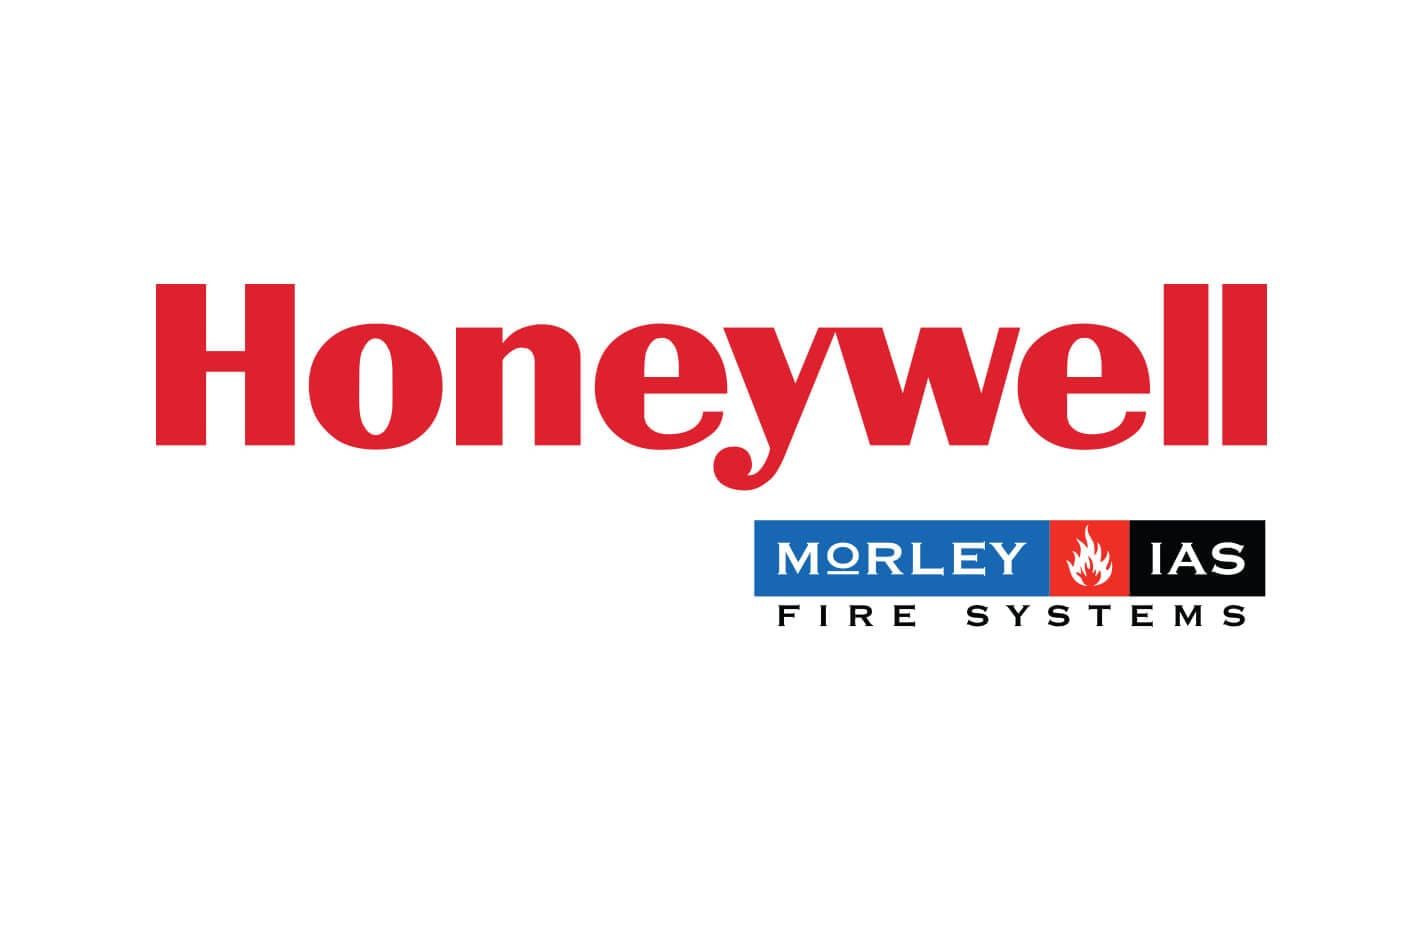 Morley-IAS by Honeywell